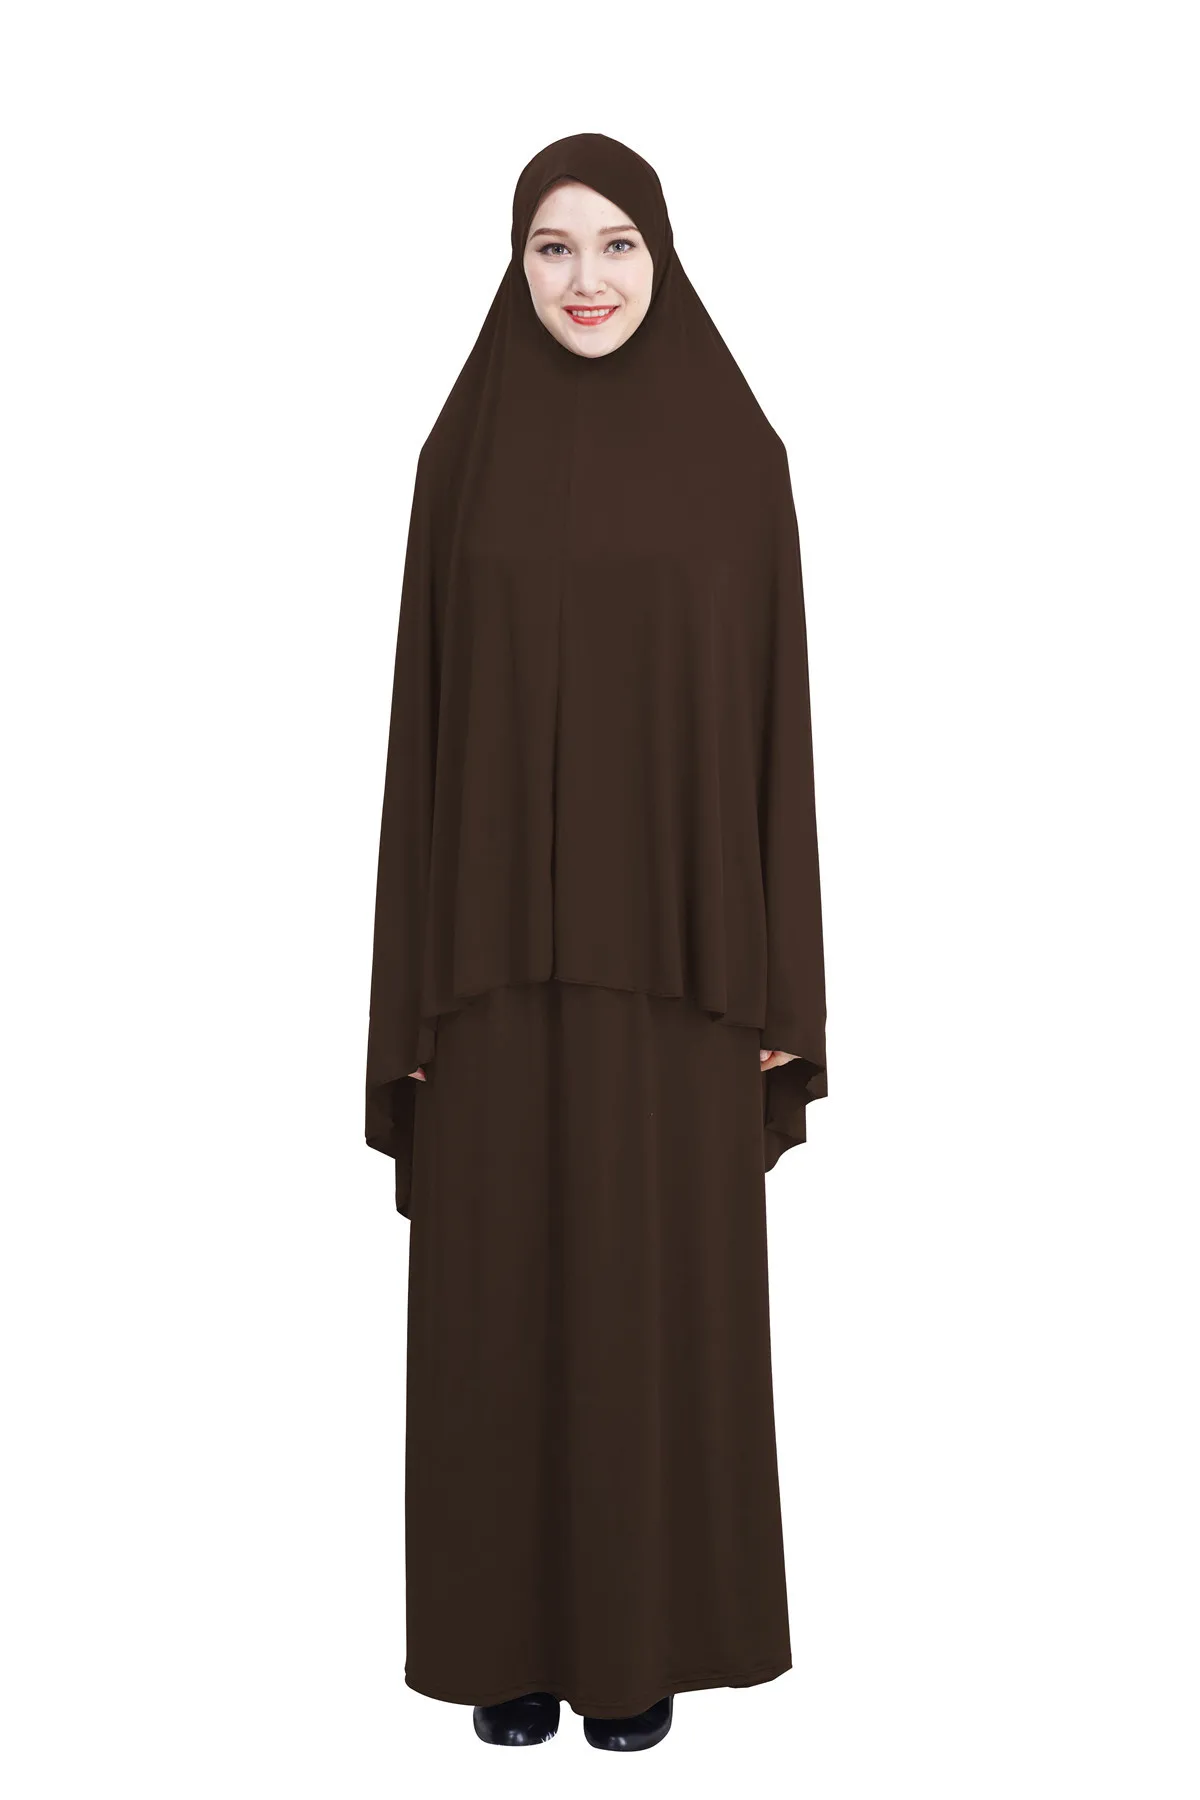 

Full Cover Muslim Women Prayer Dress Niquab Long Scarf Khimar Hijab Islam Large Overhead Clothes Jilbab Ramadan Arab Middle East